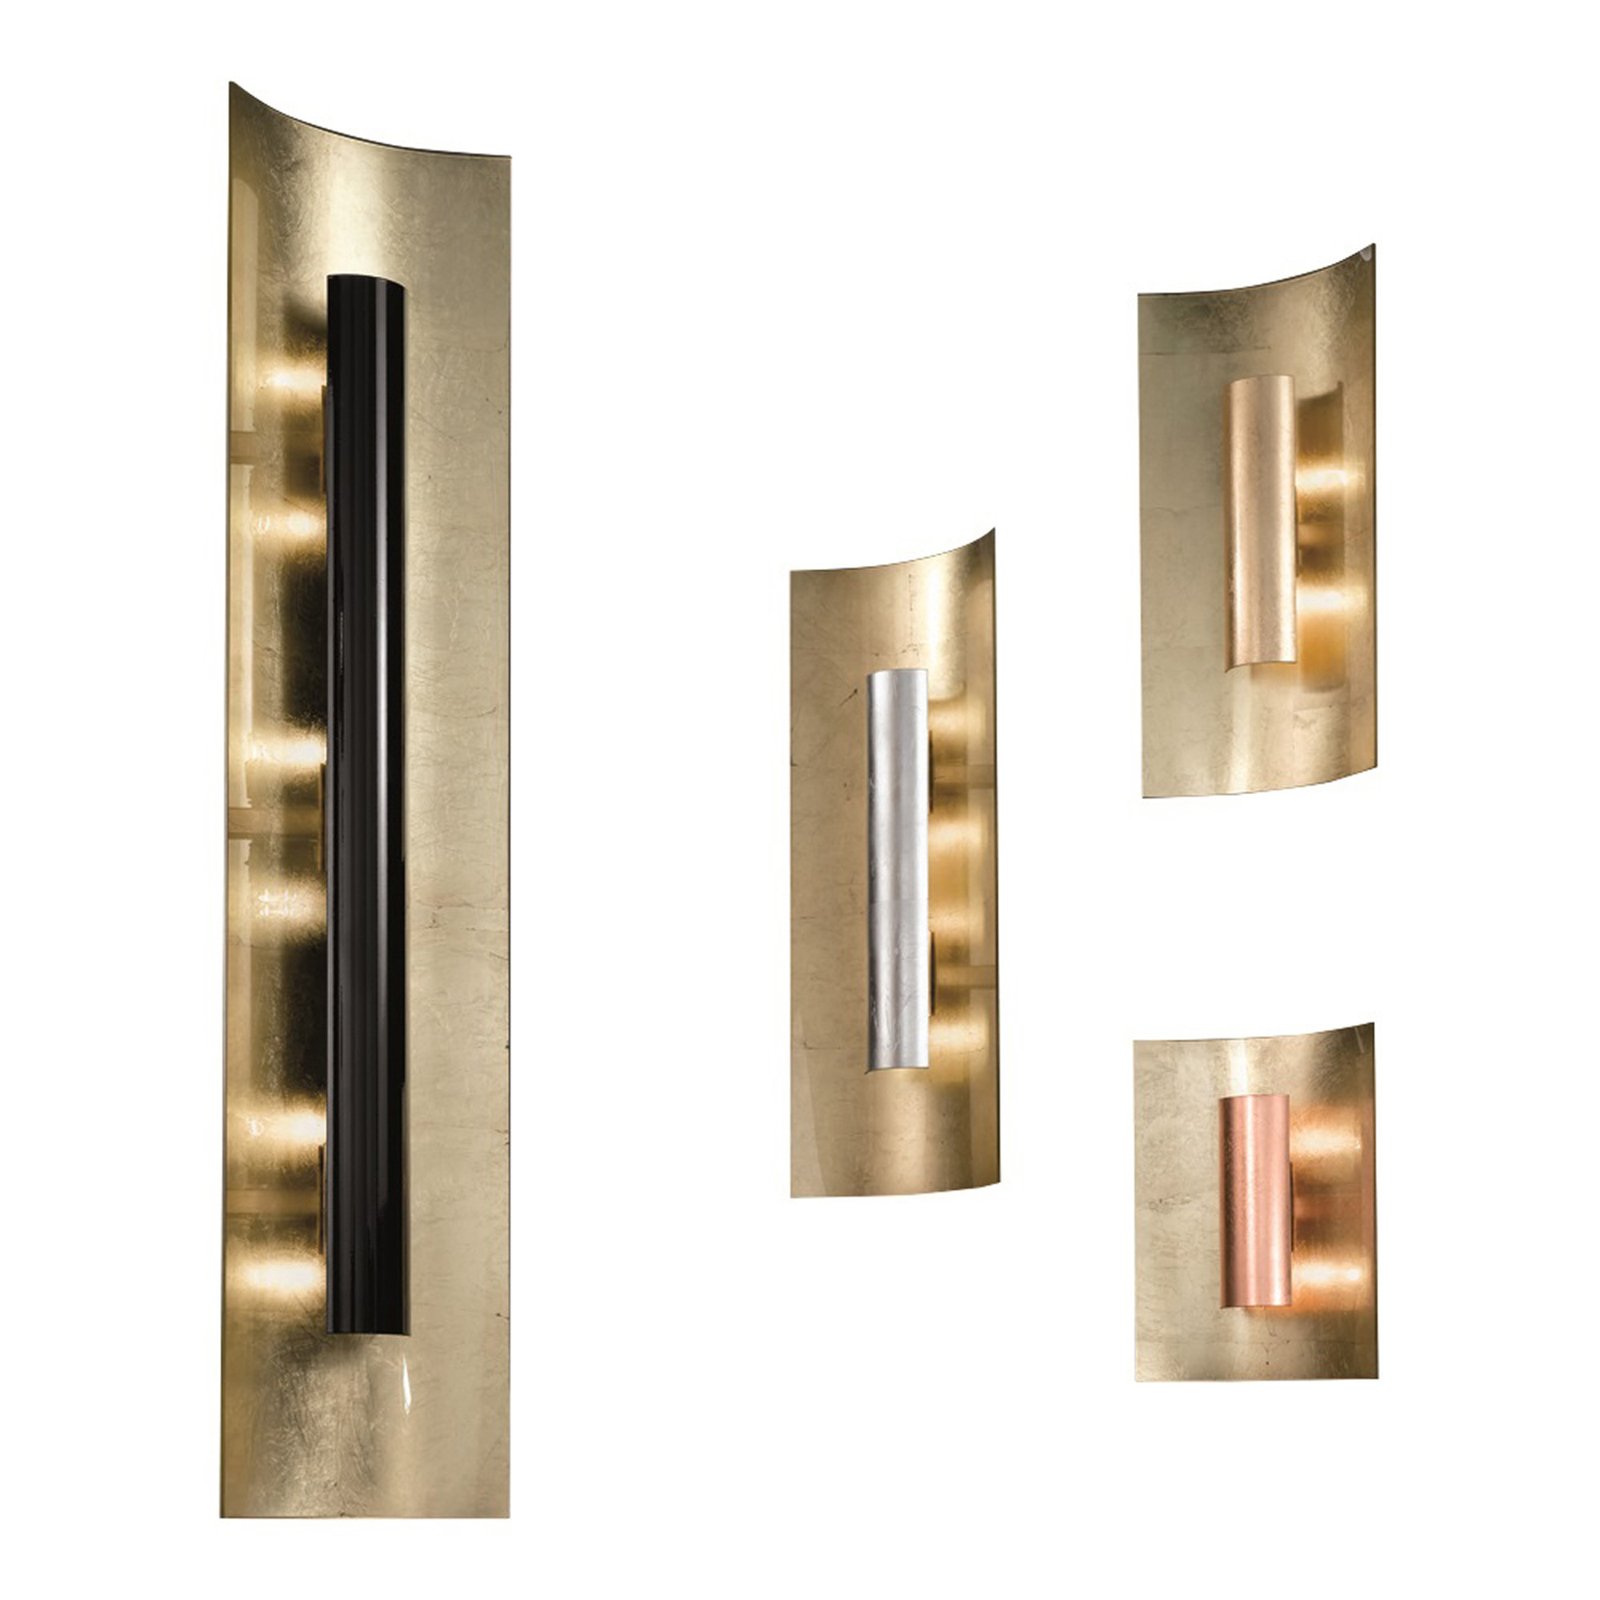 Aura Gold wall light, silver shade, height 100cm